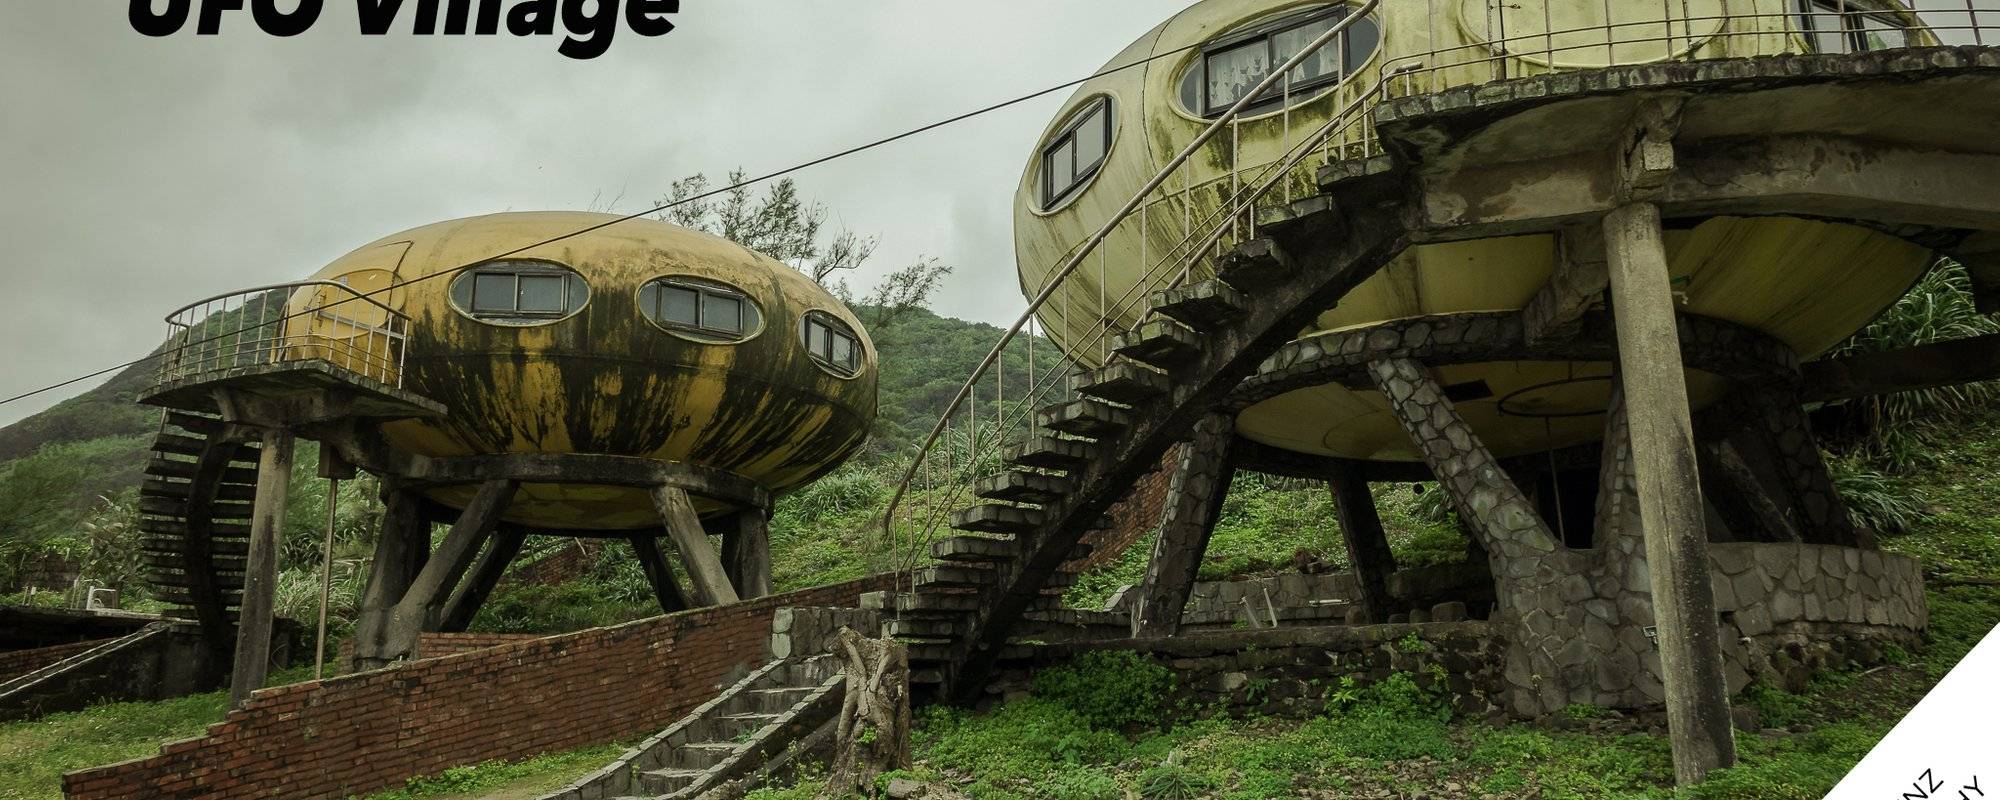 Visiting Taiwan's abandoned UFO village [EN/DE]